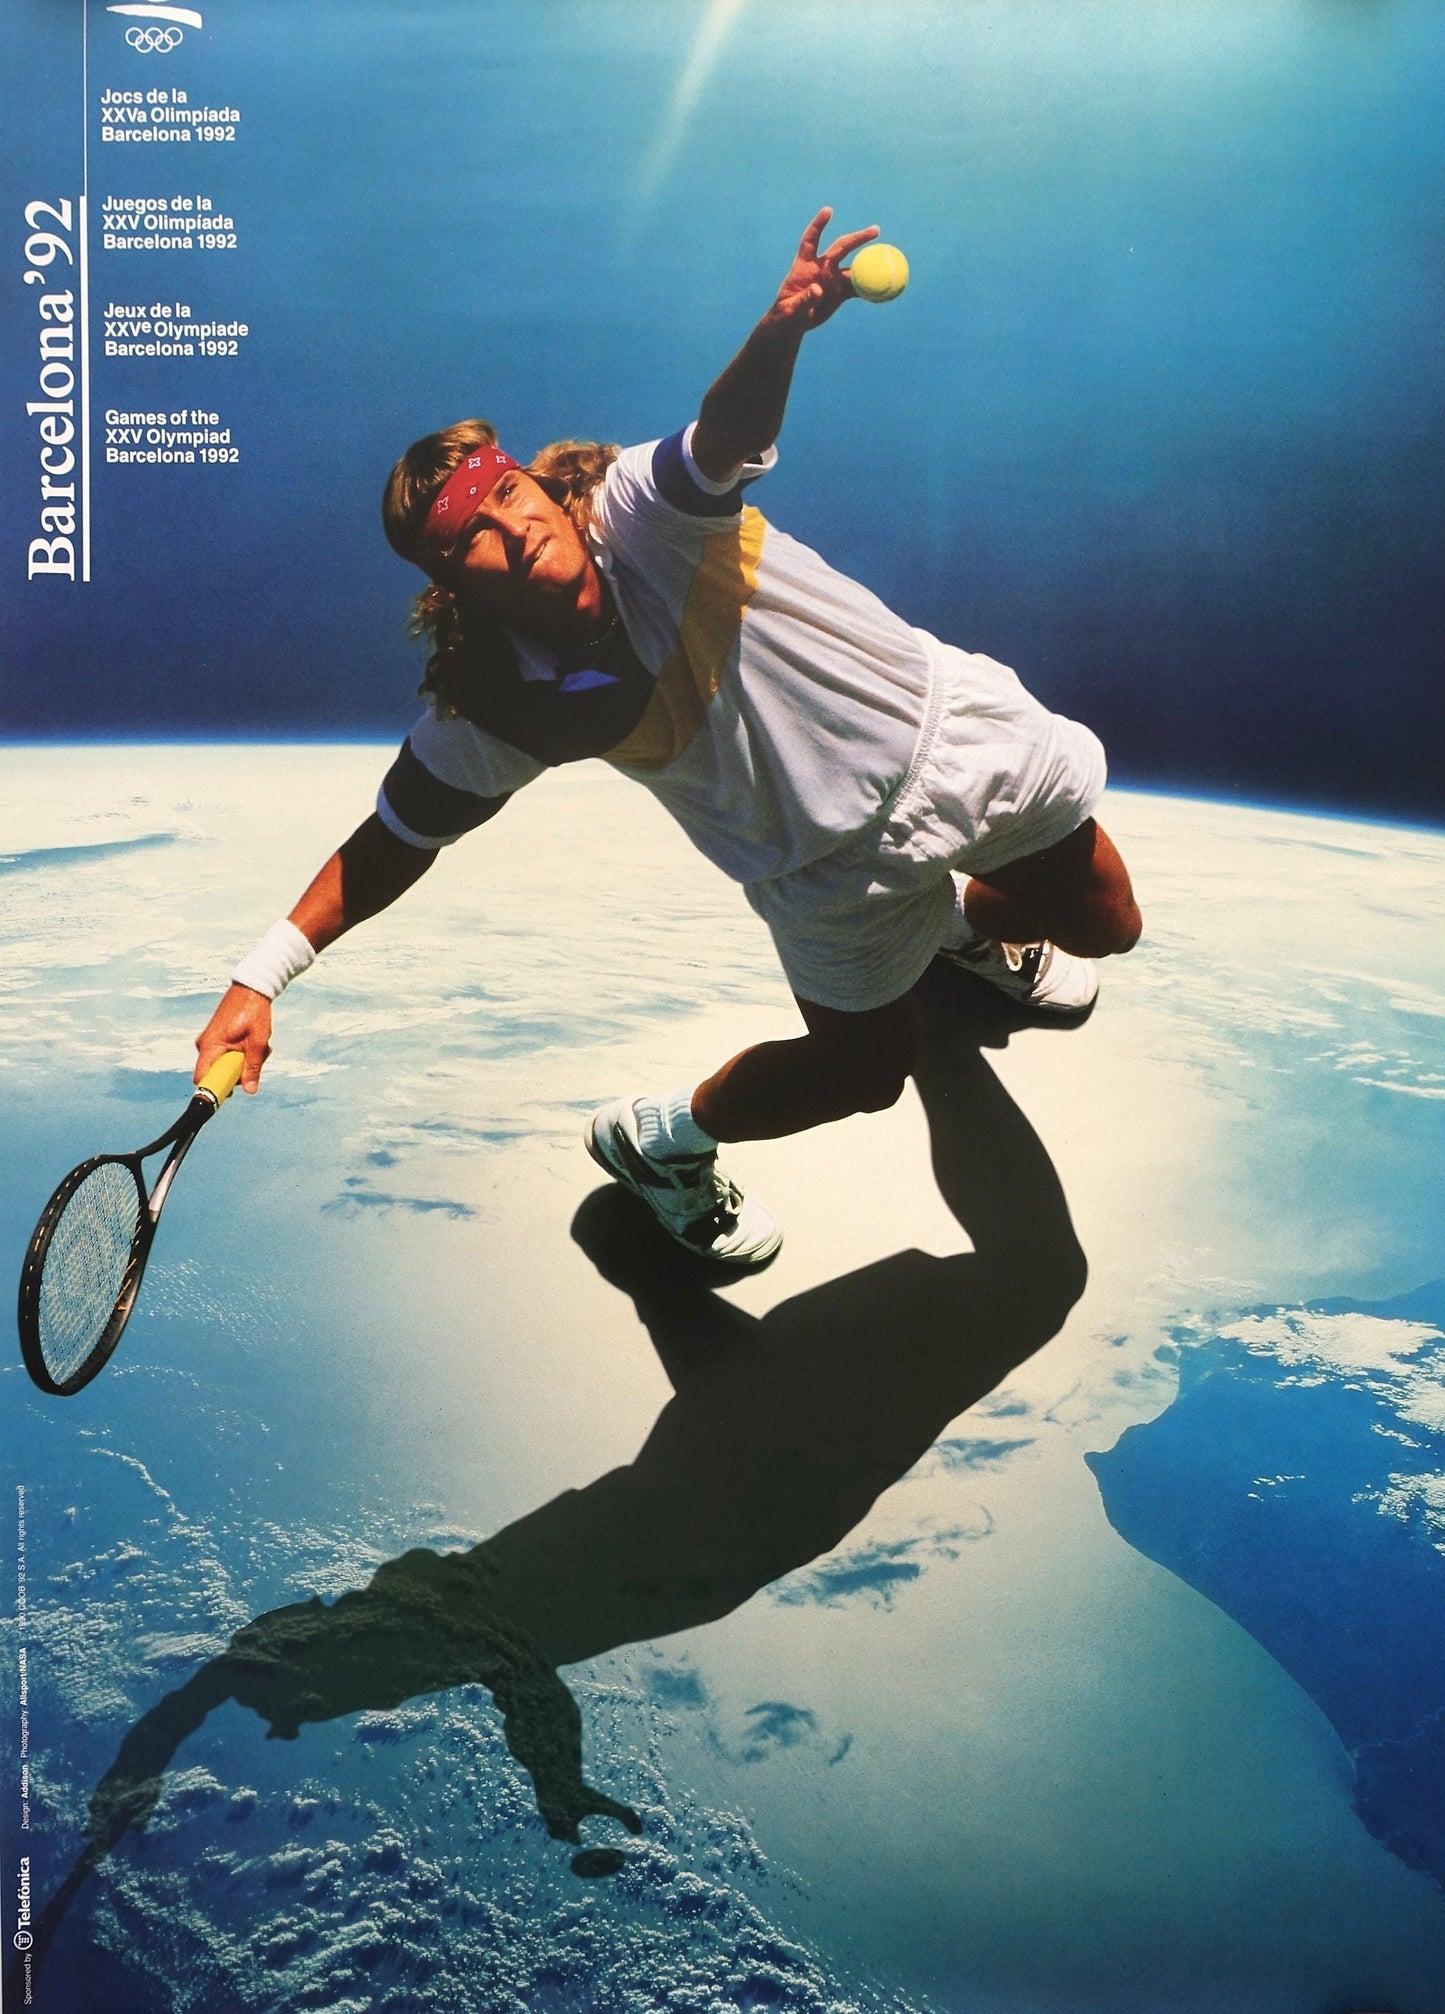 1992 Summer Olympic Games Tennis - Original Vintage Poster